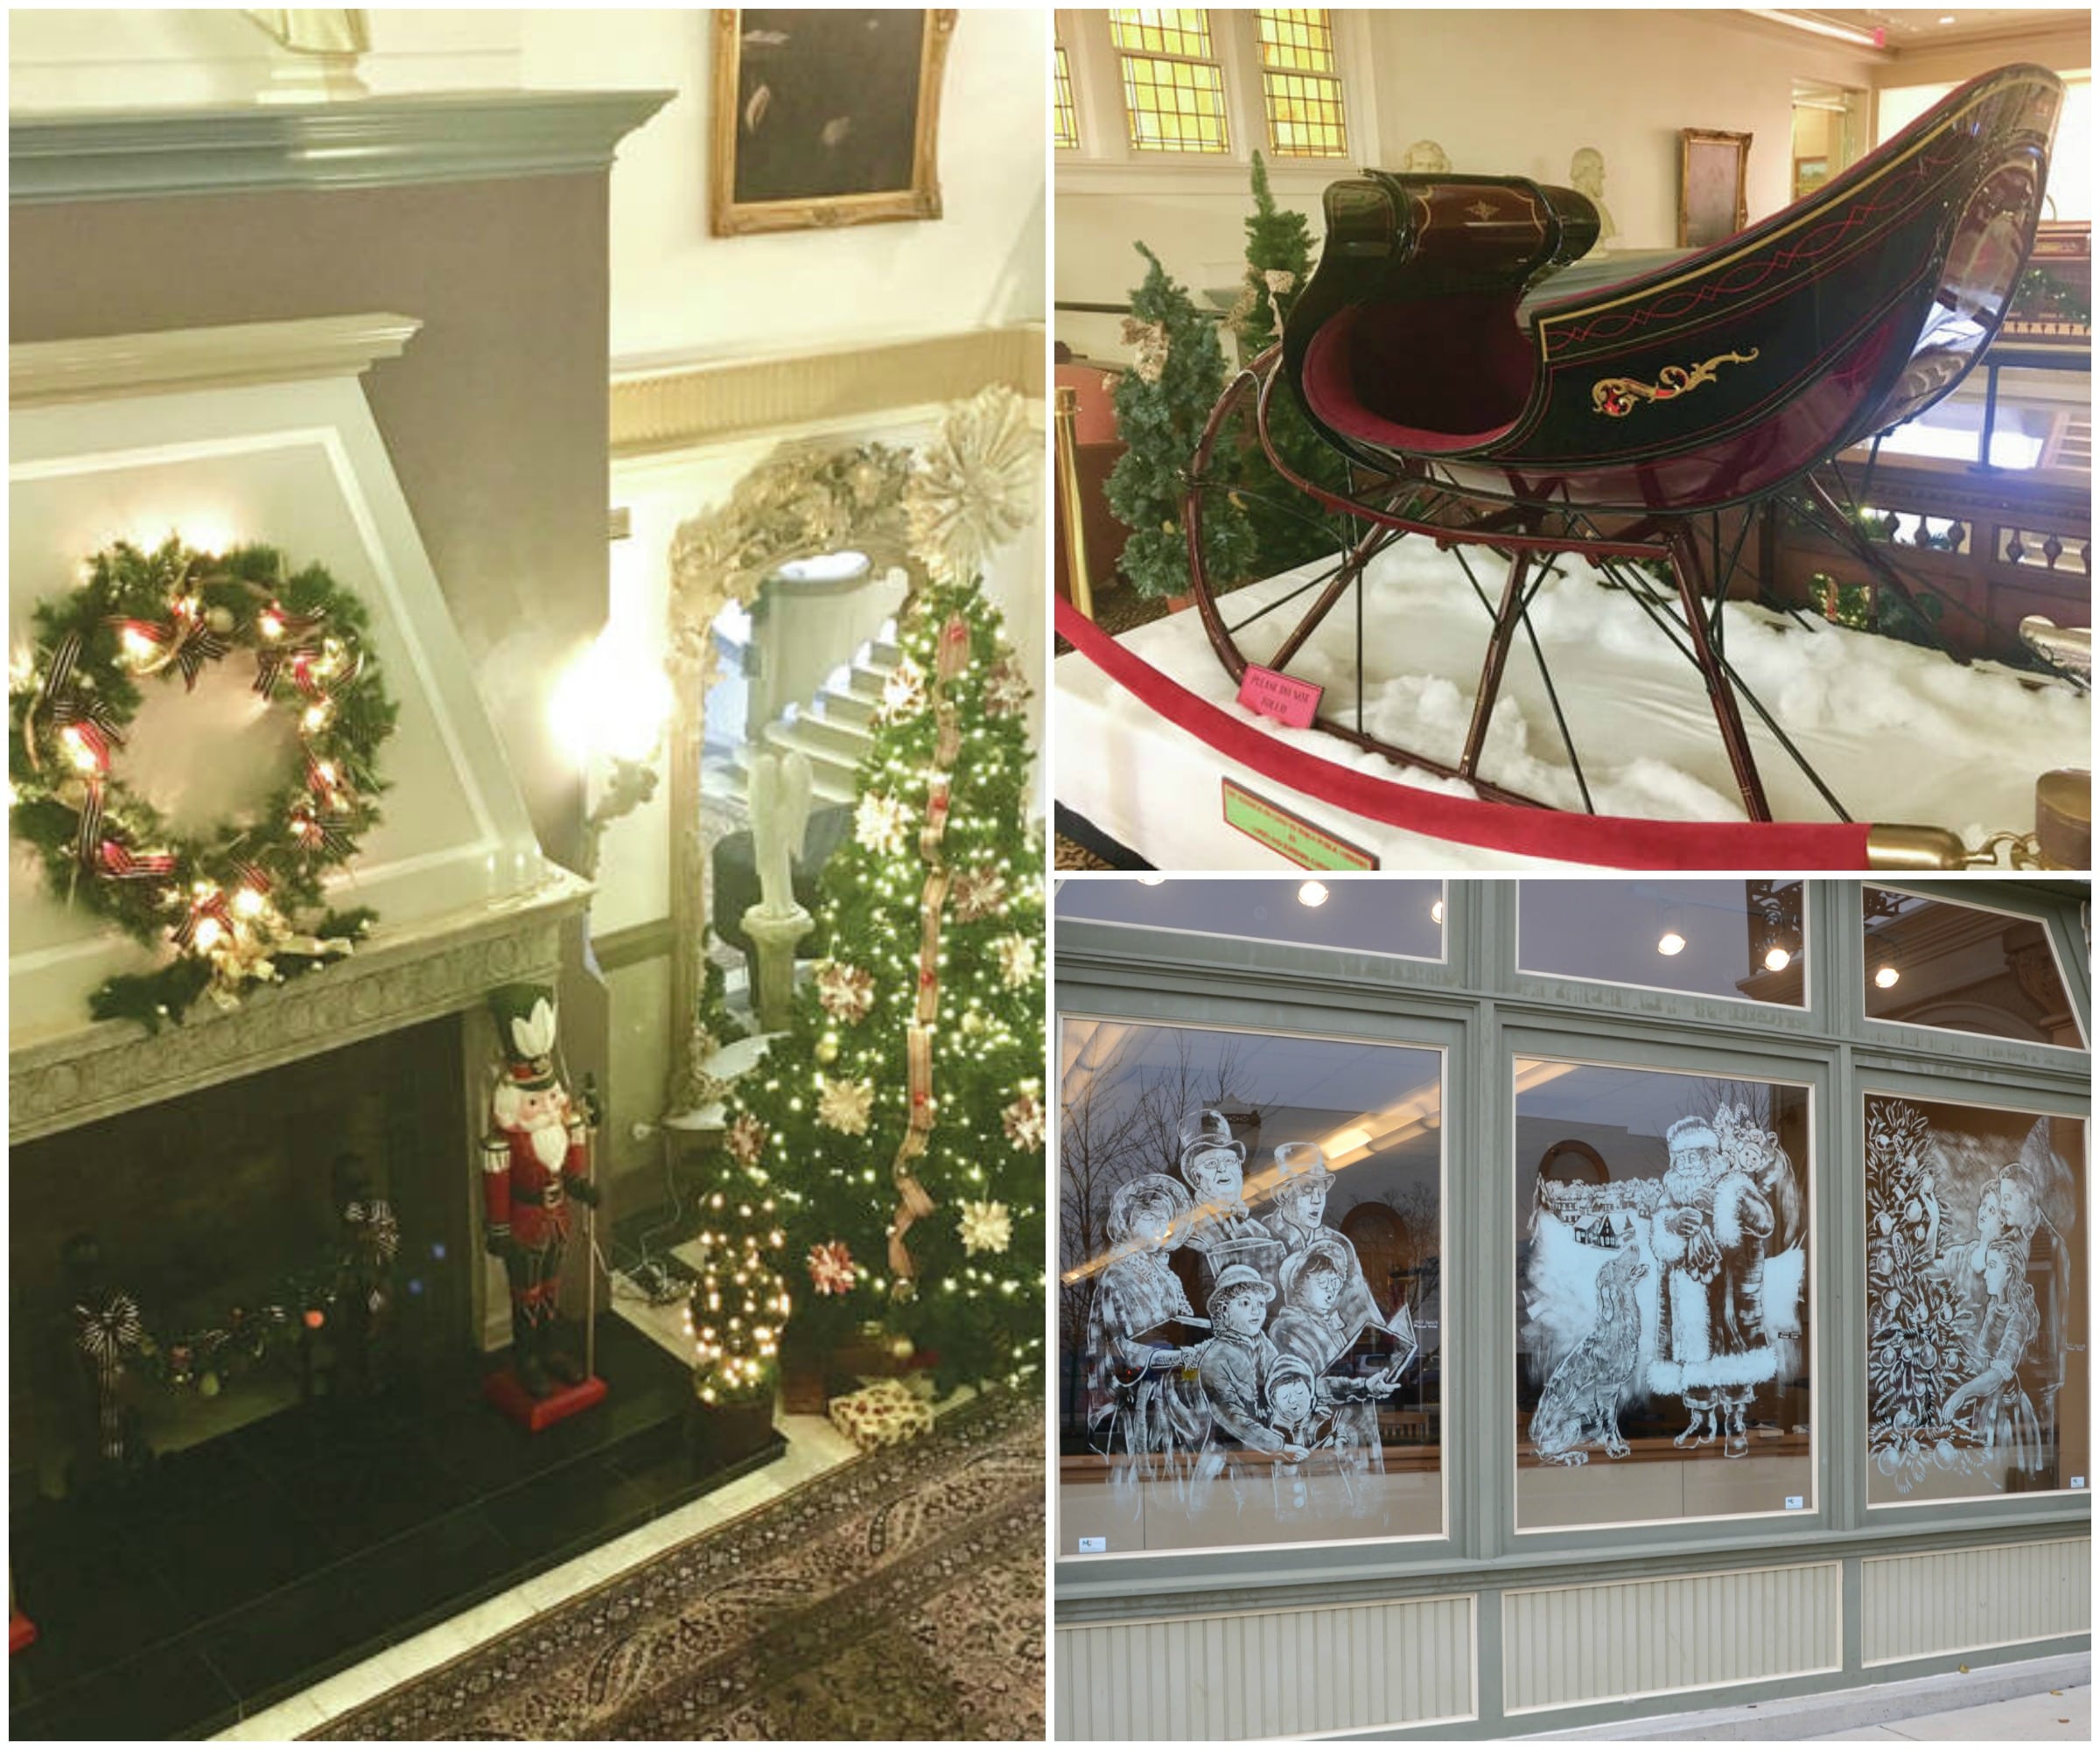 Lobby Christmas 2017, RP Spiker carriage sleigh, Michael Glass windows